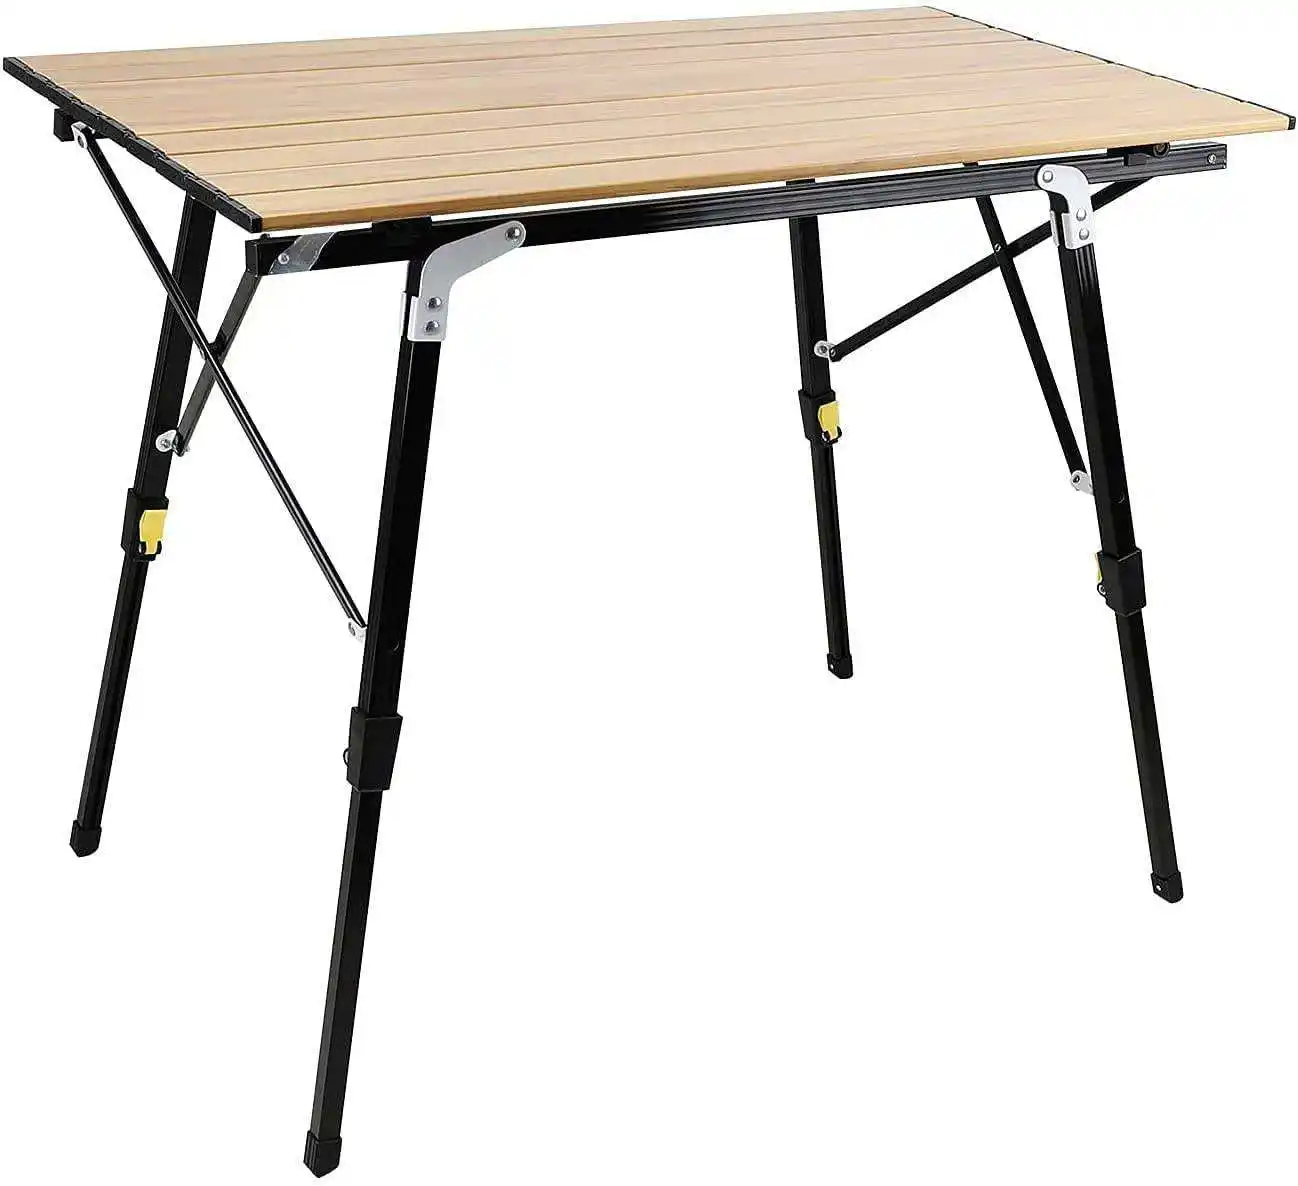 mesas para exteriores Wood Grain Folding Adjustable Table Portable Picnic Table Outdoor Camping Table